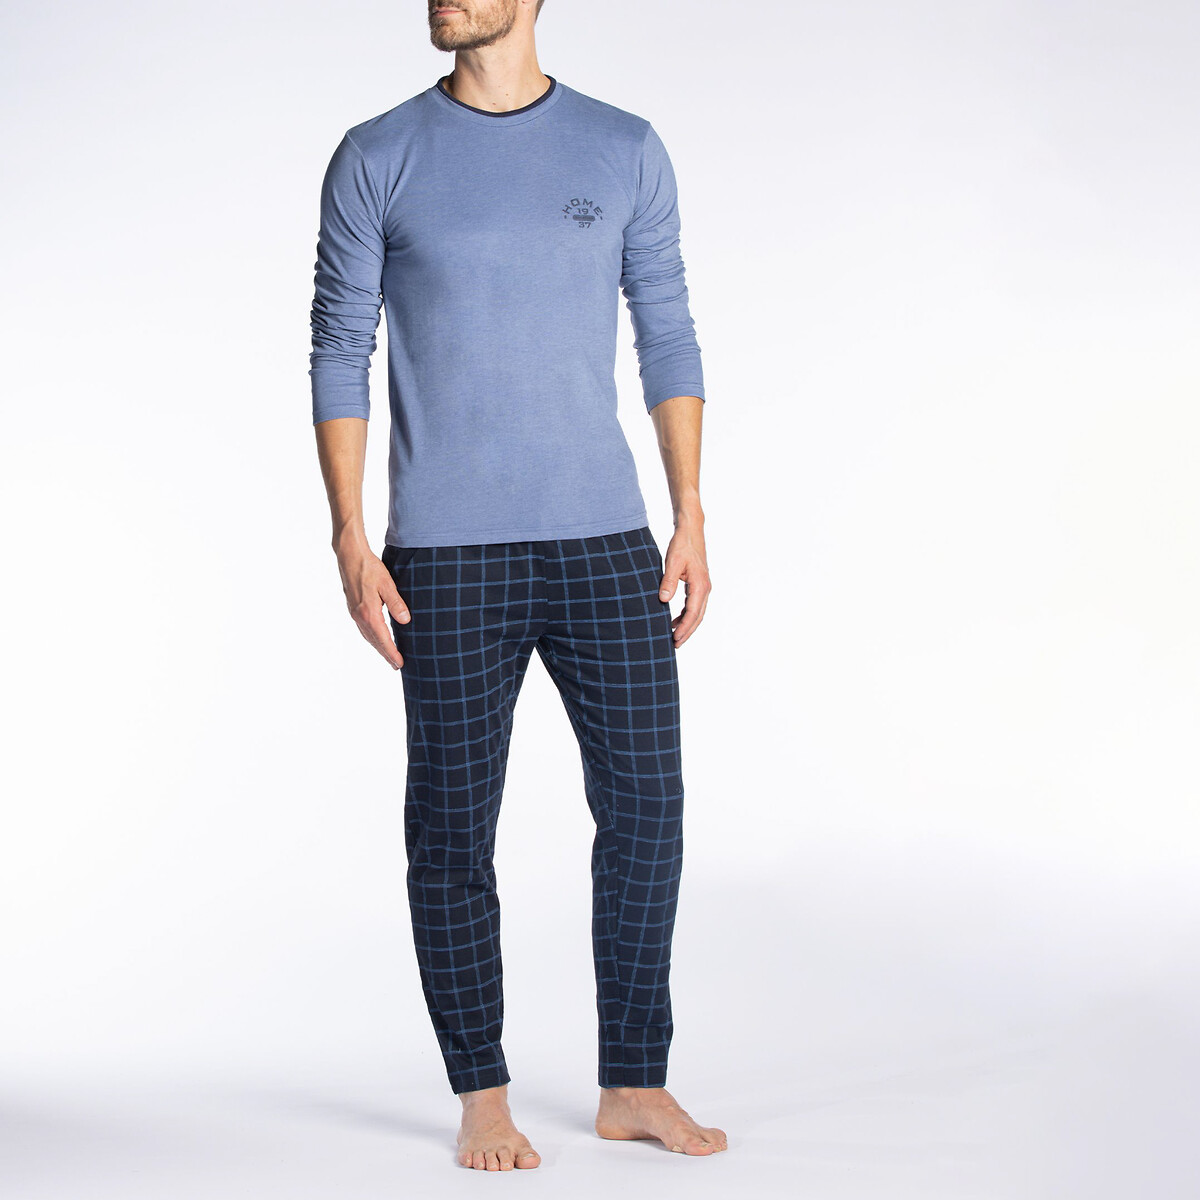 Cotton Mix Pyjamas with Long Sleeves